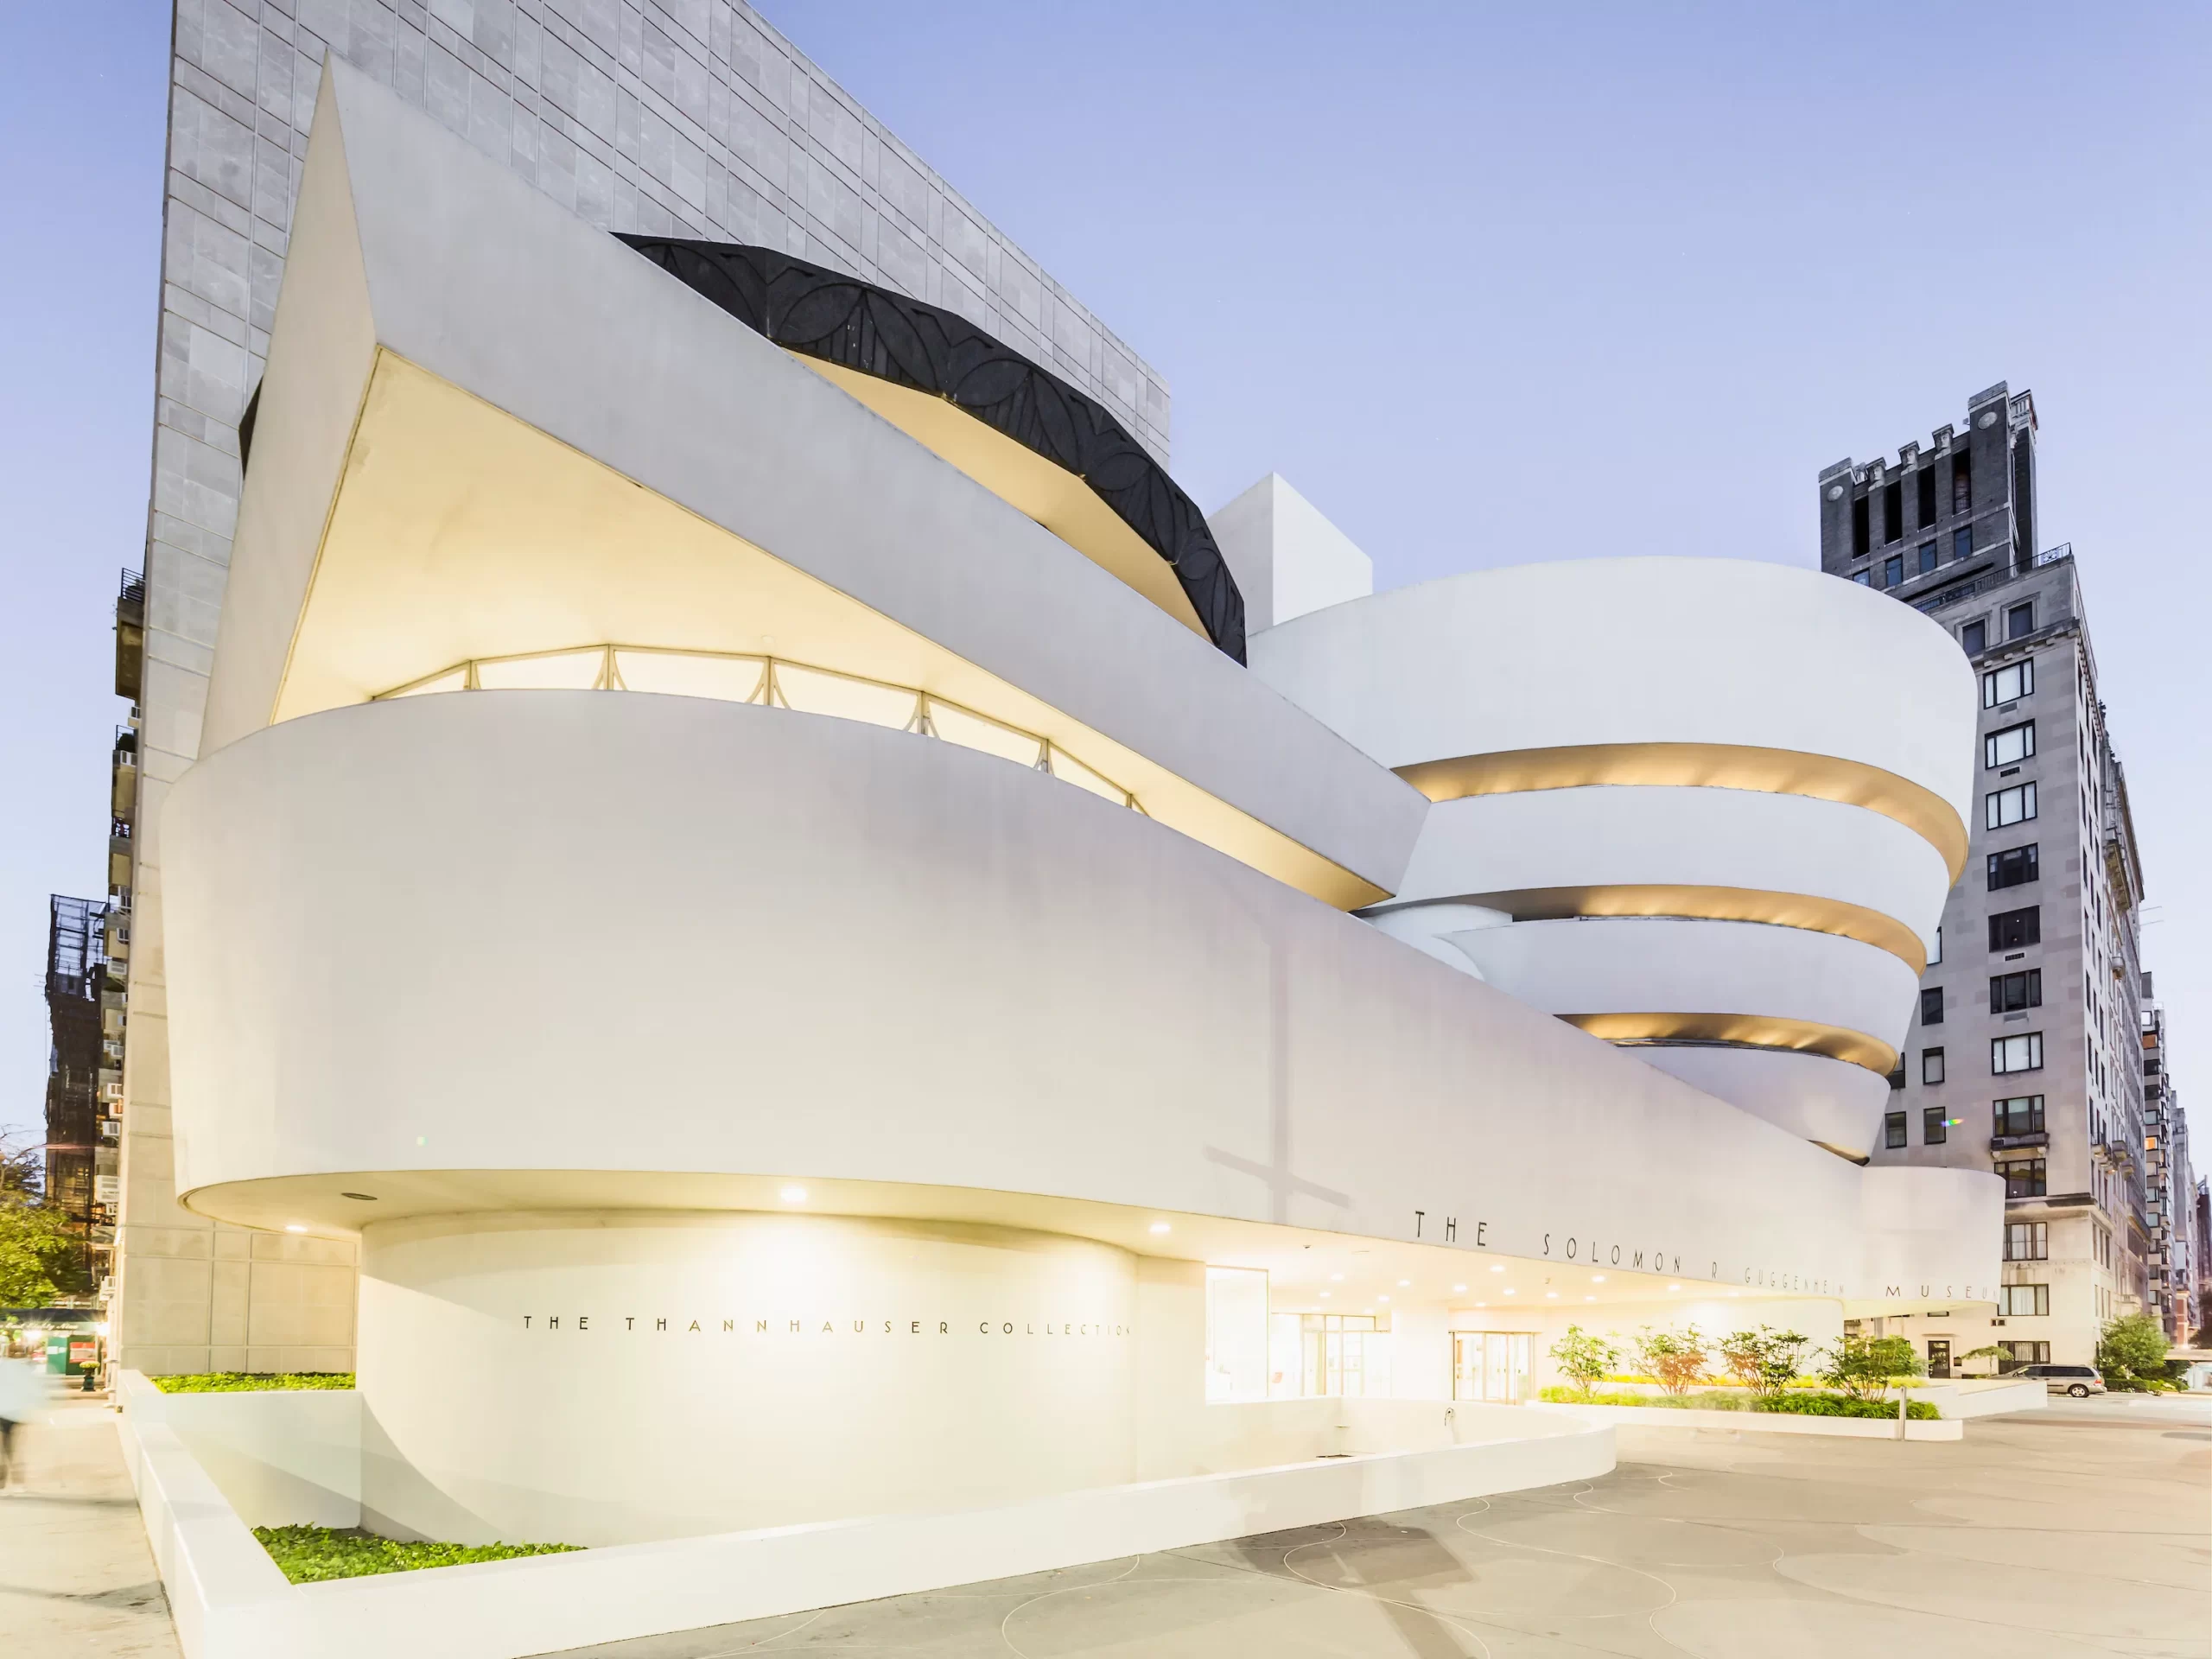 Guggenheim Museum